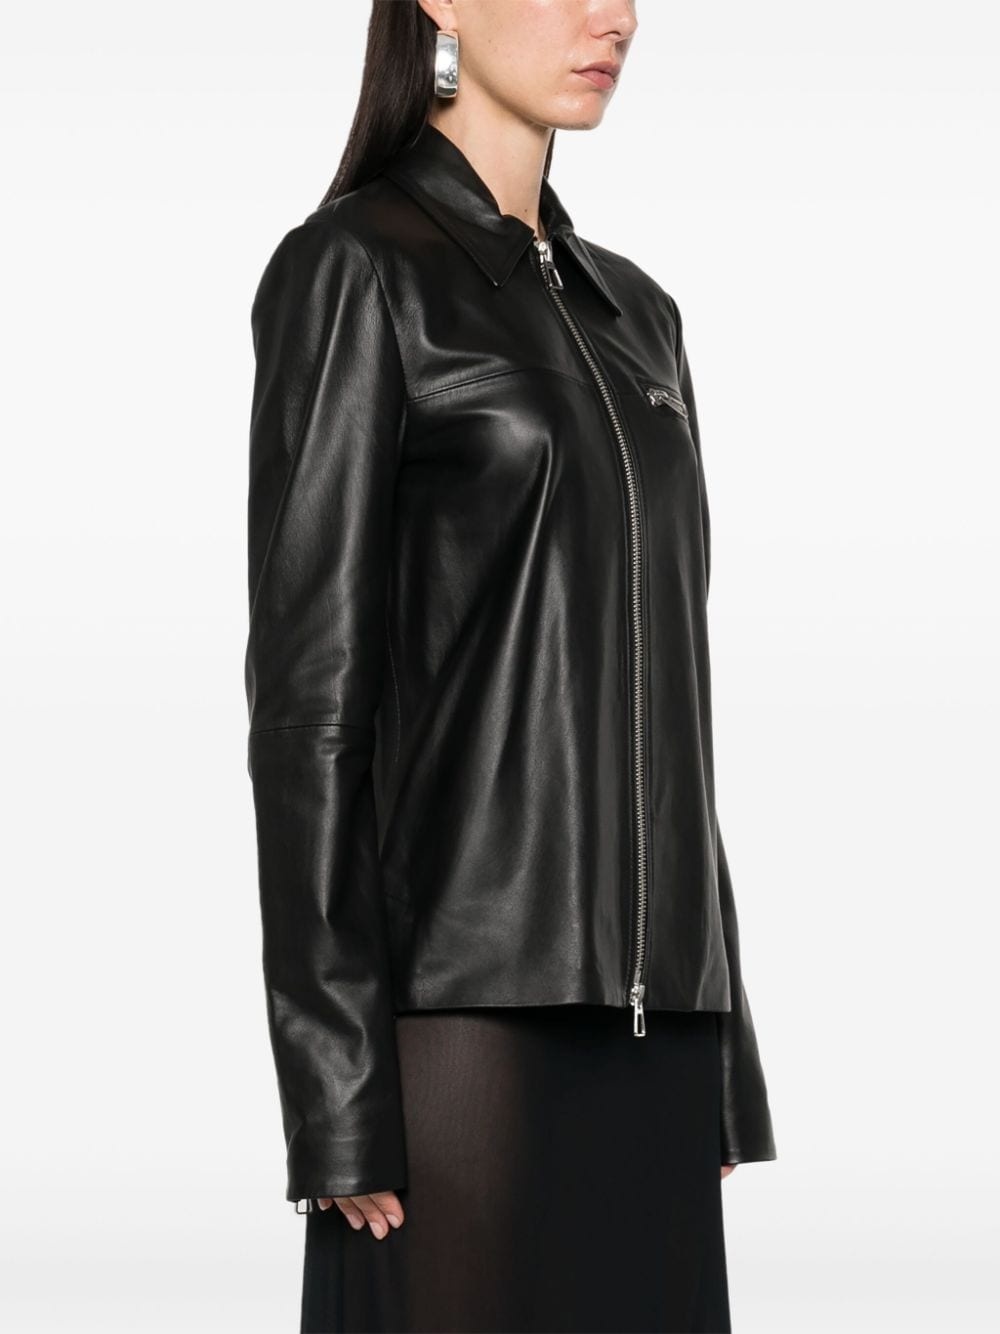 Gel leather jacket - 3